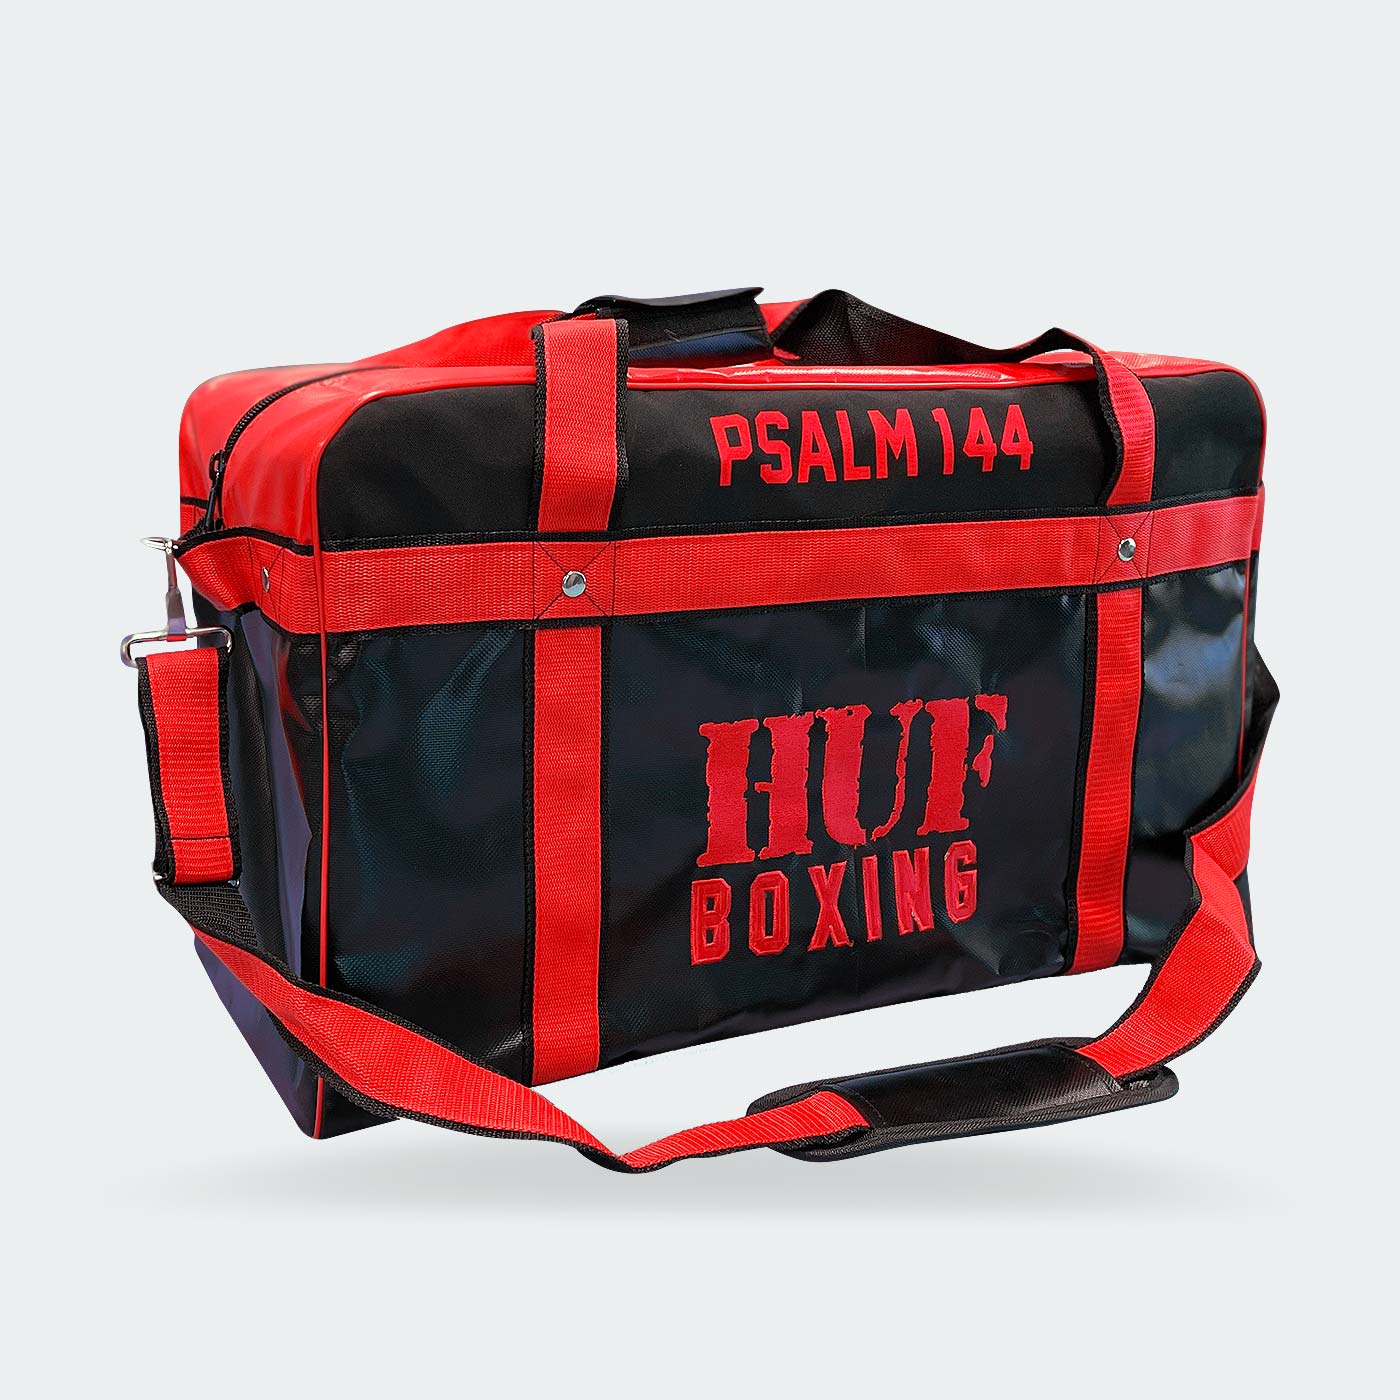 HUF Boxing Travel/Gym Bag - GSW Customs